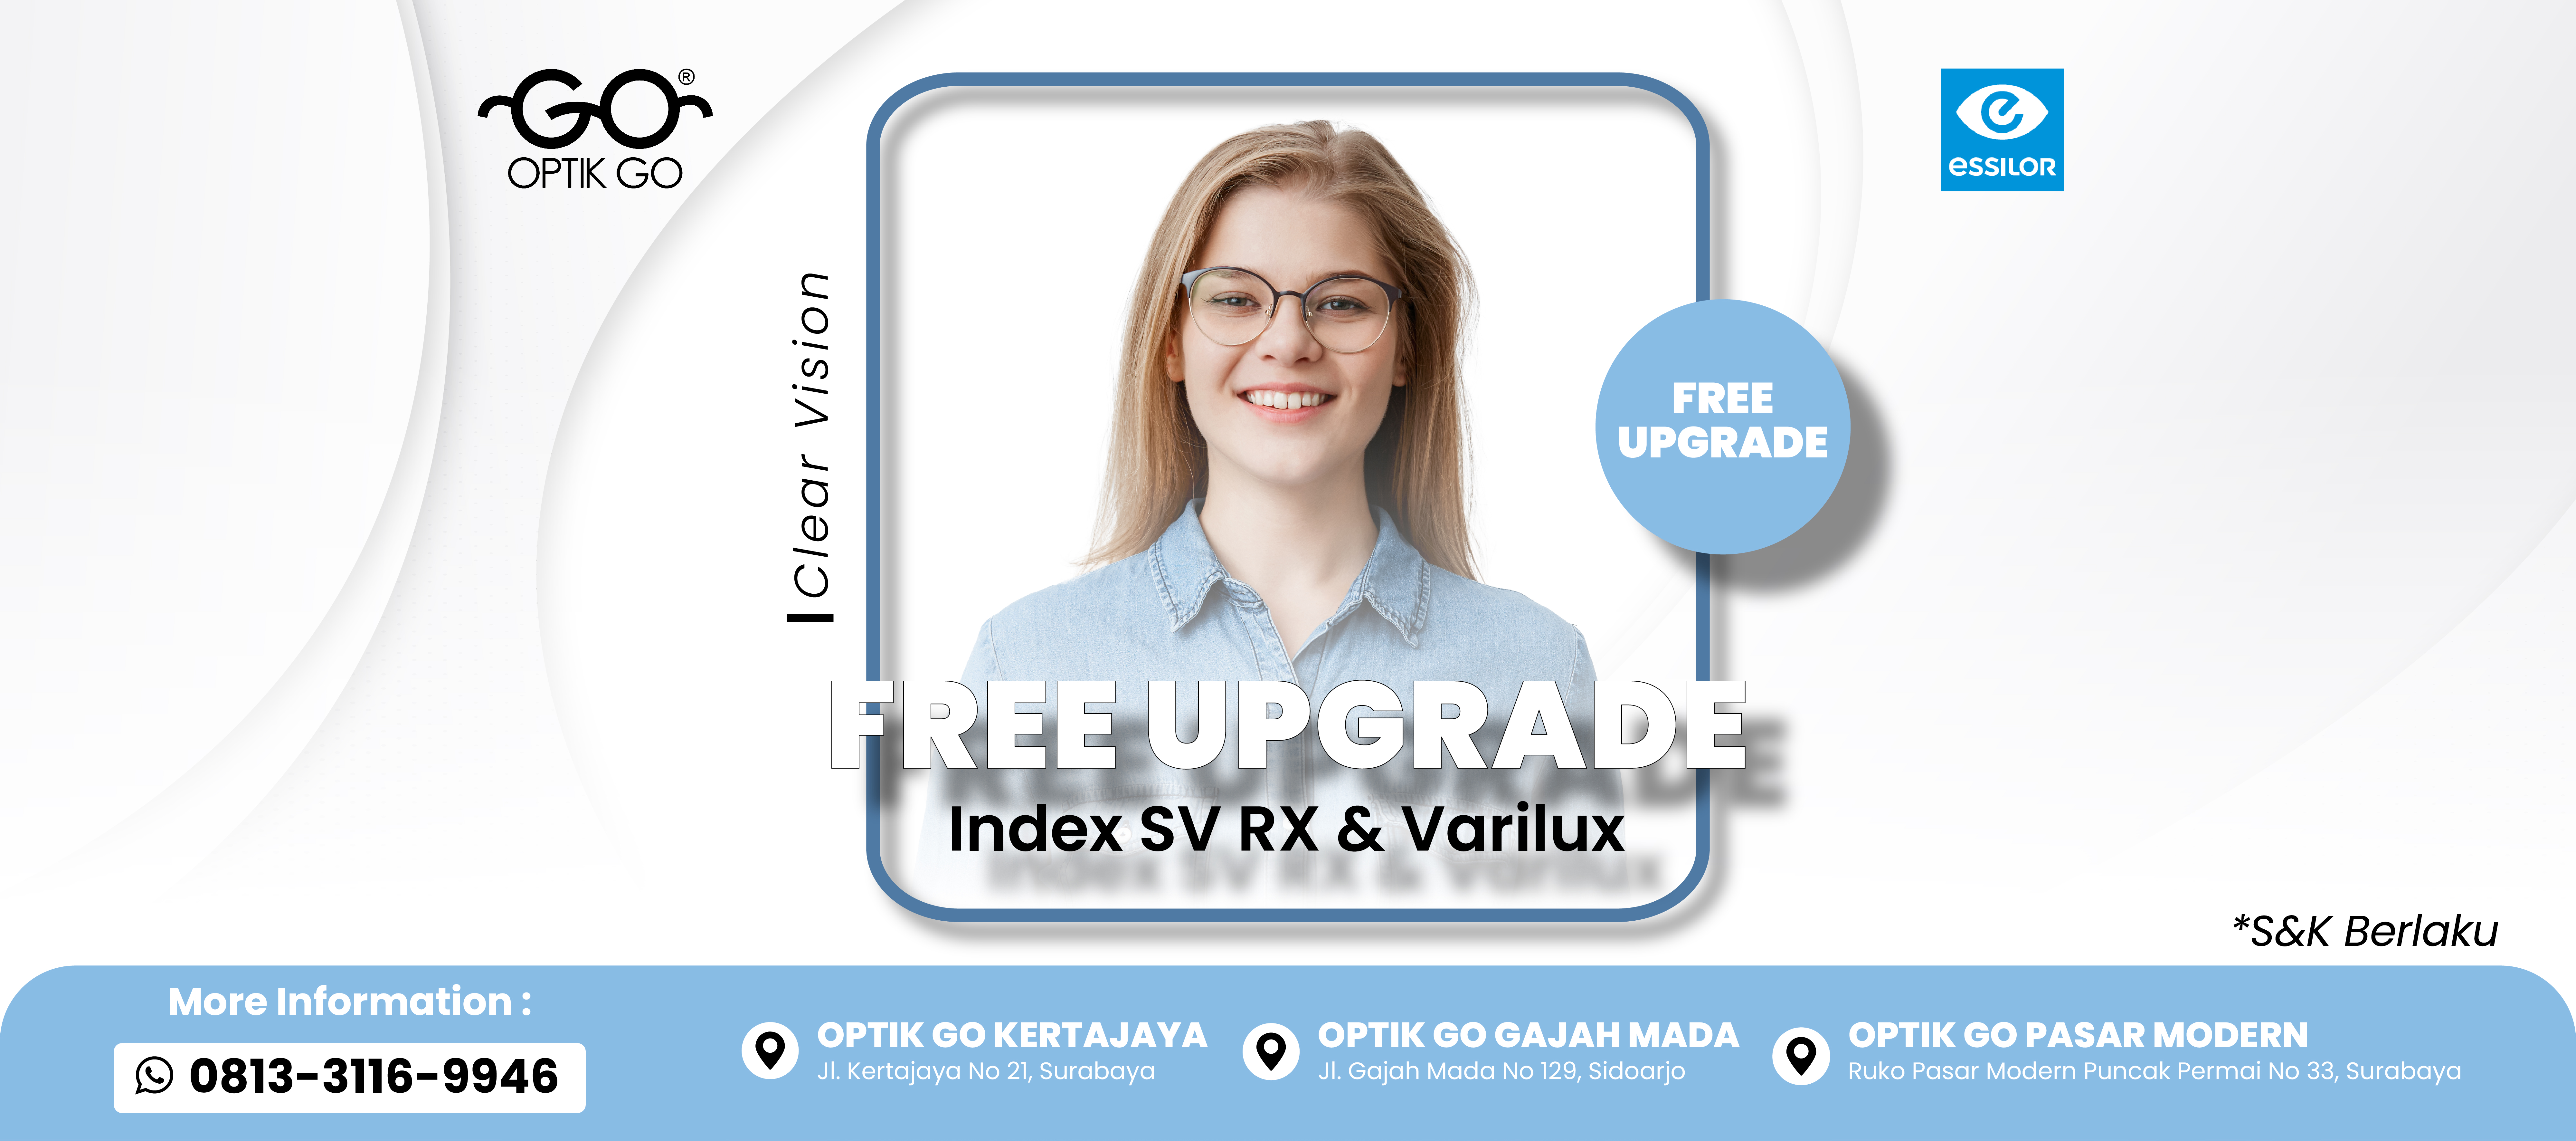 Free Upgrade Index SV RX & Varilux